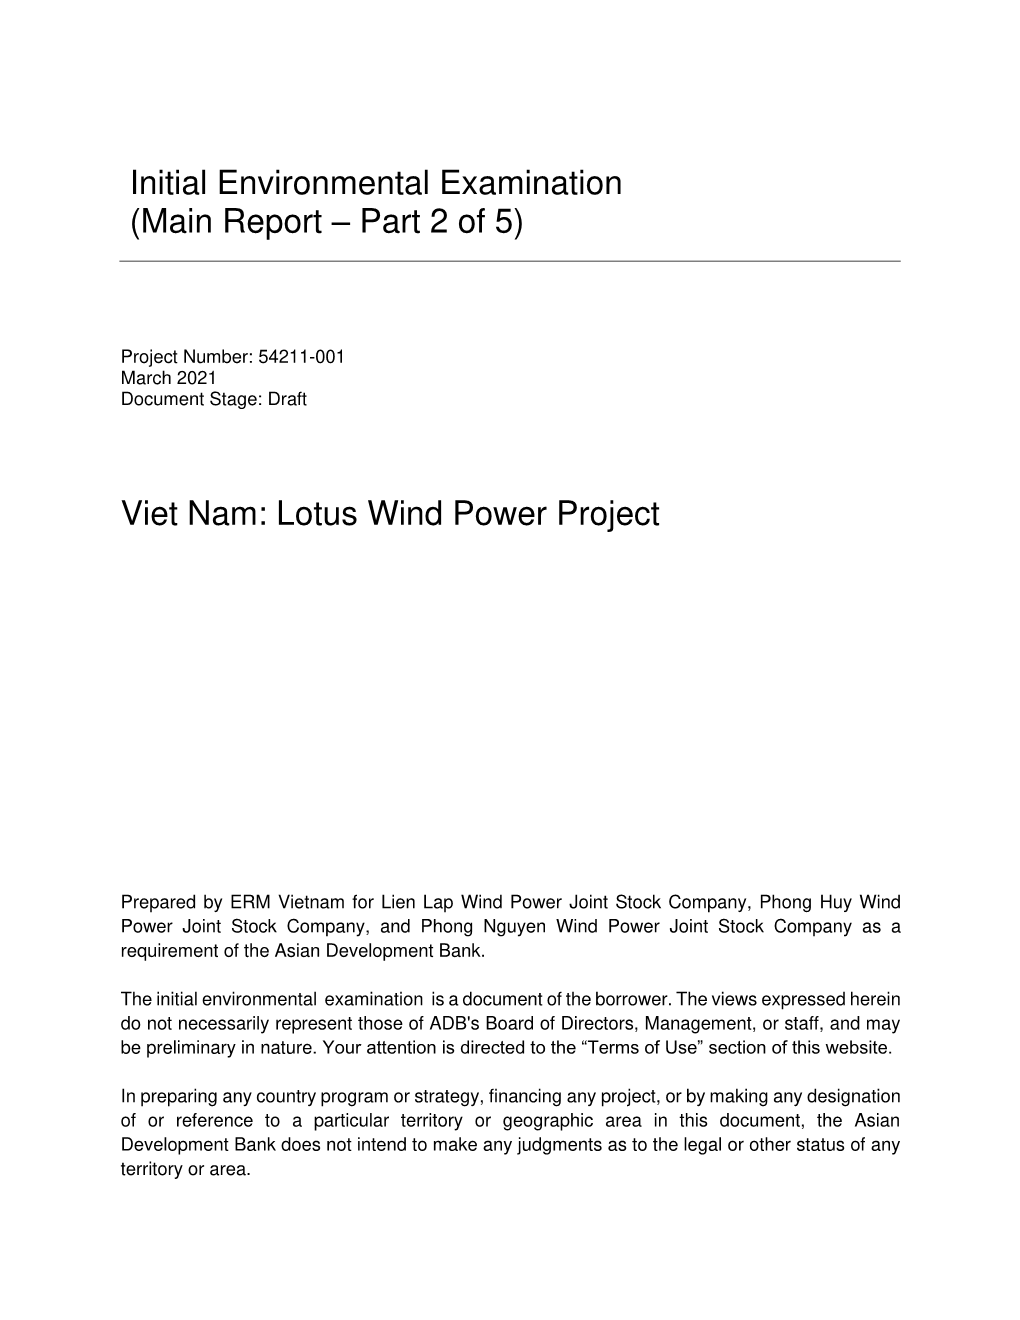 Initial Environmental Examination (Main Report – Part 2 of 5) Viet